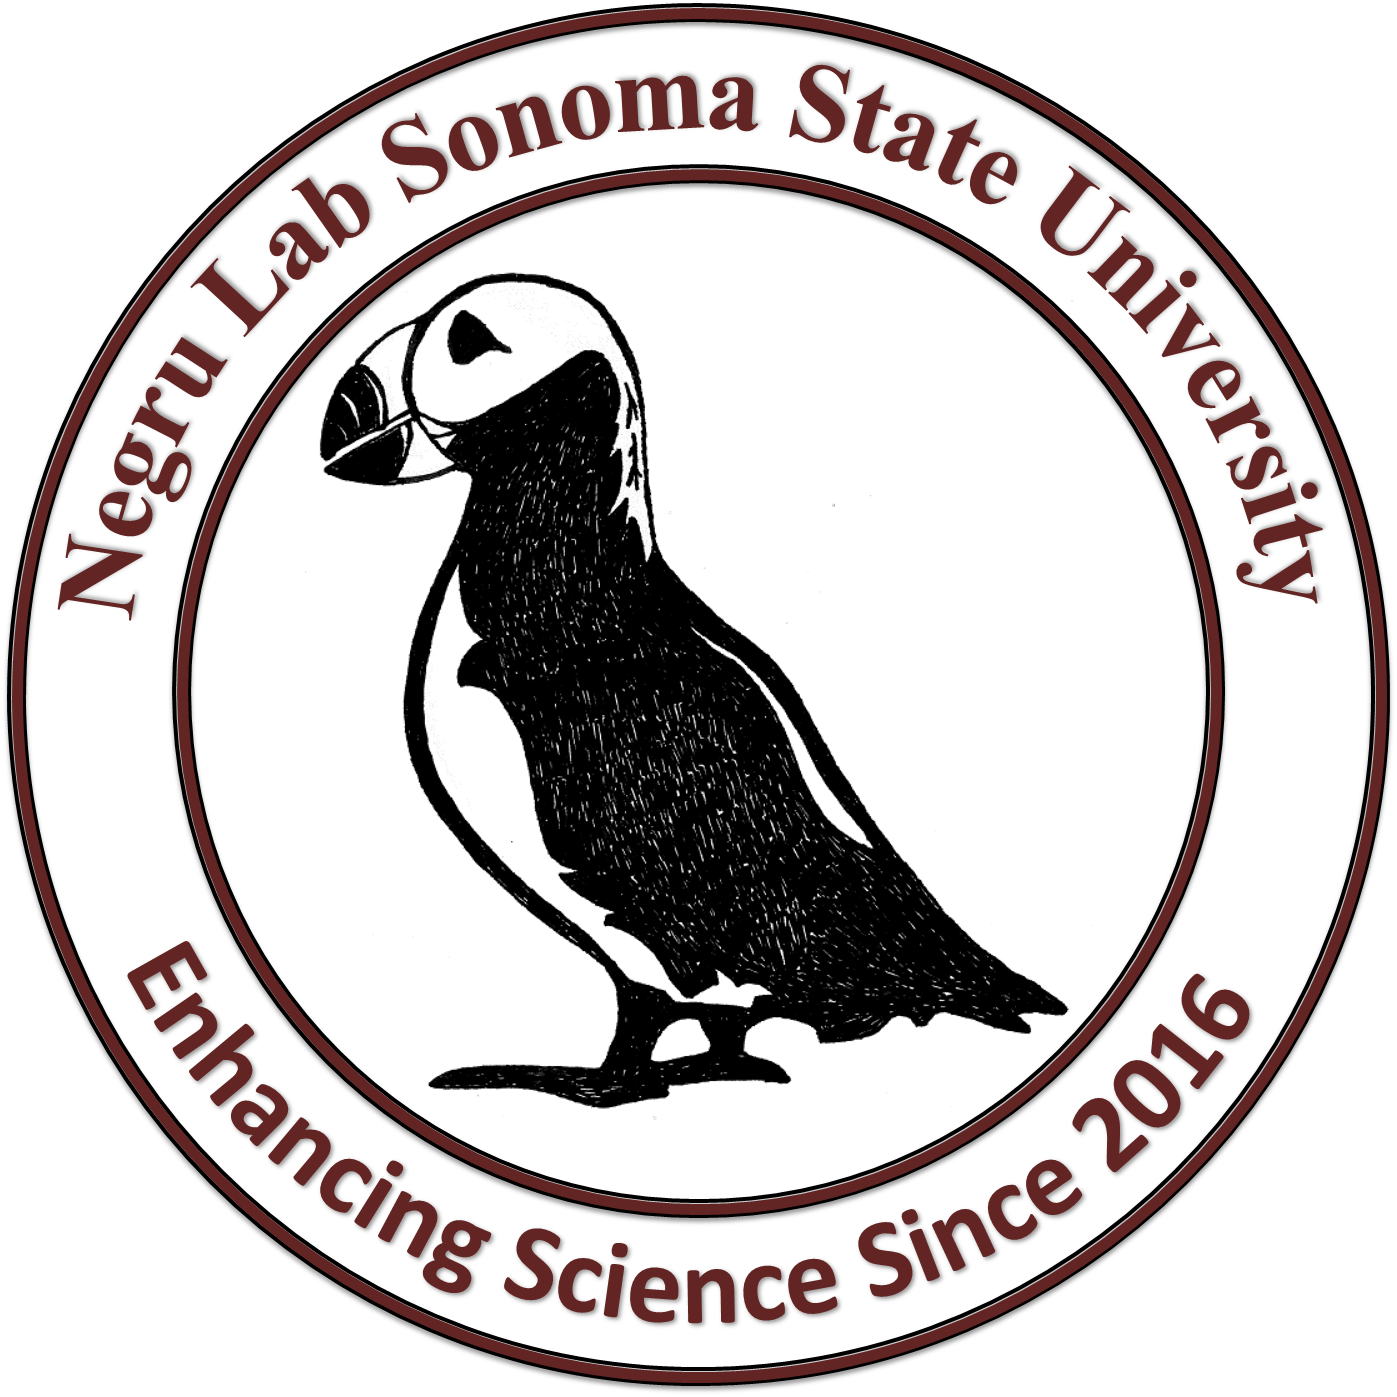 Negru Lab Sonoma State University Enhancing Science Since 2016